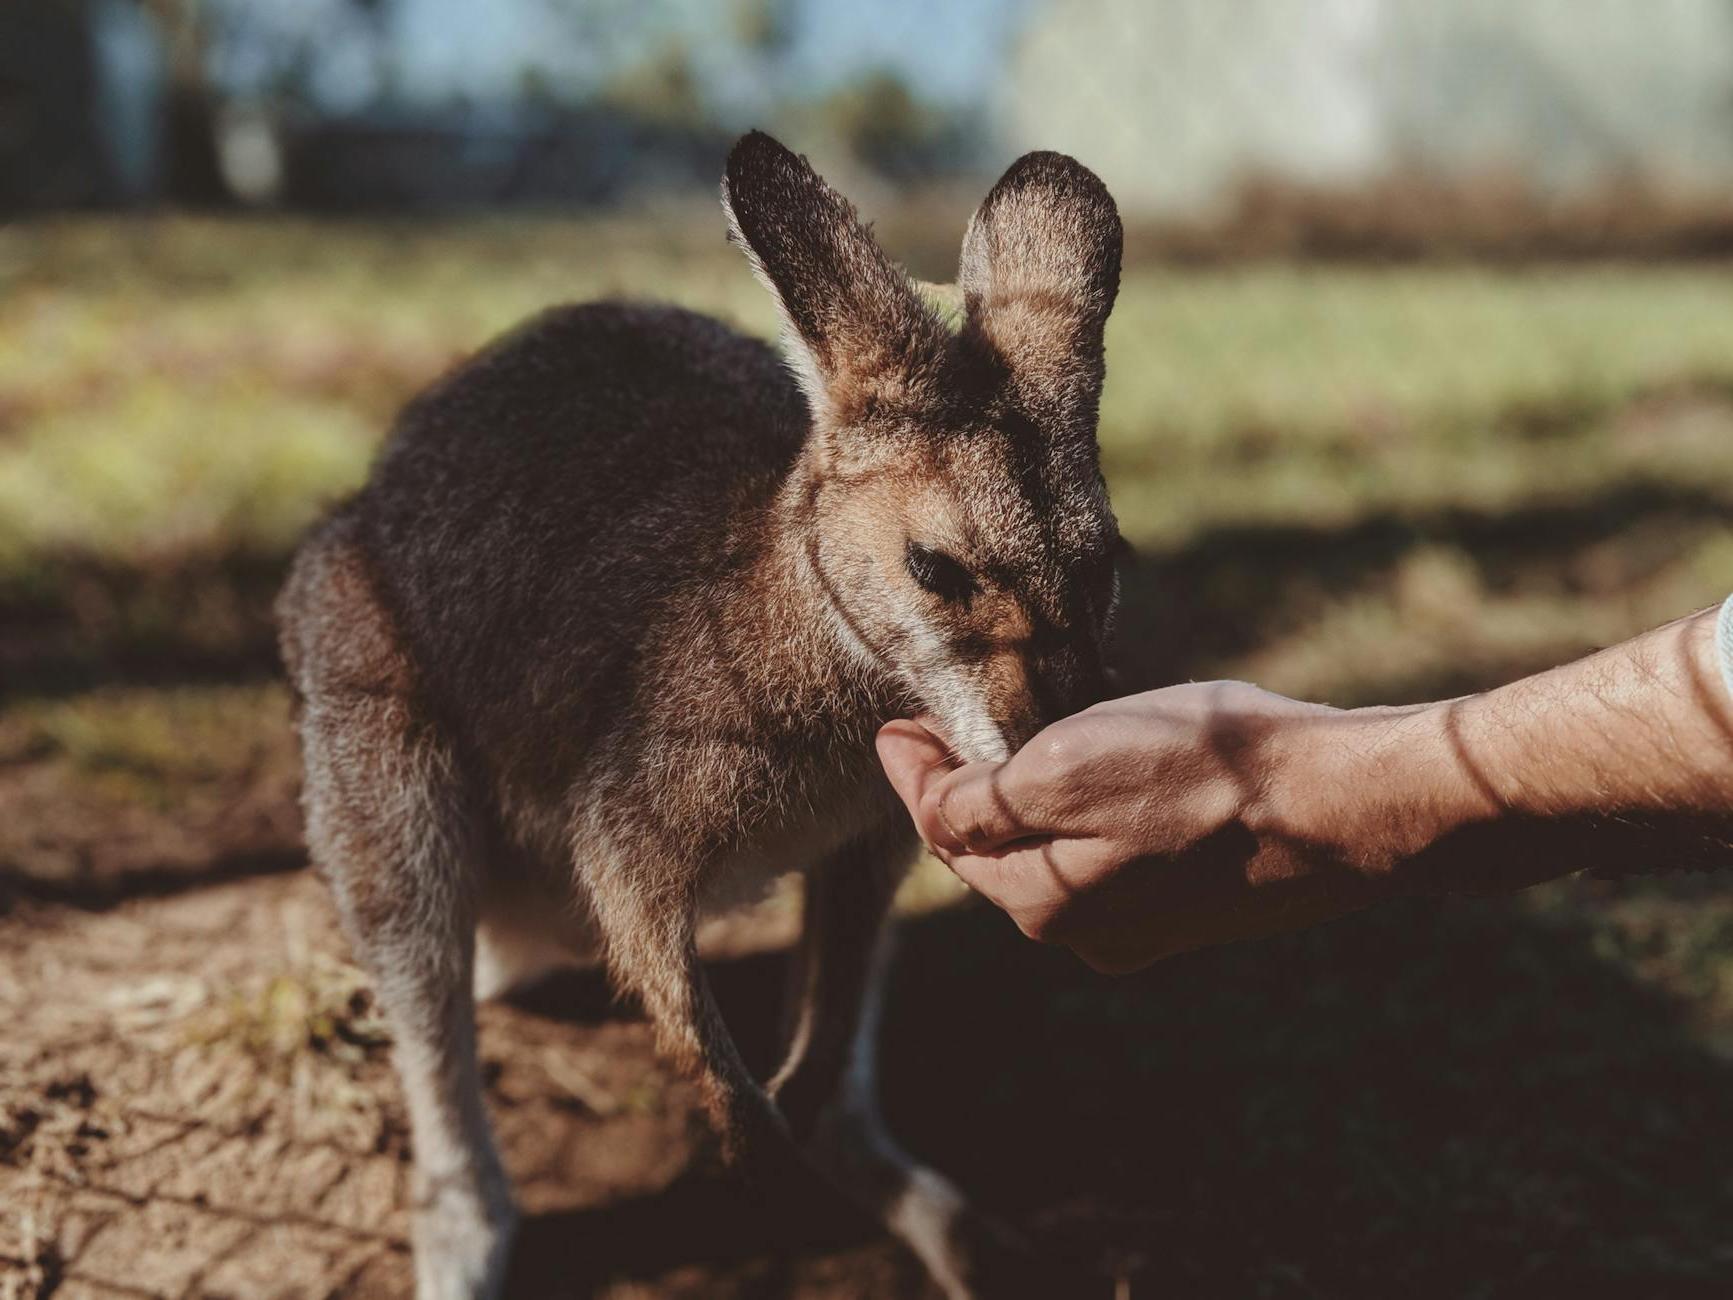 Close-Up Photo of Person's Hand Feeding a Kangaroo